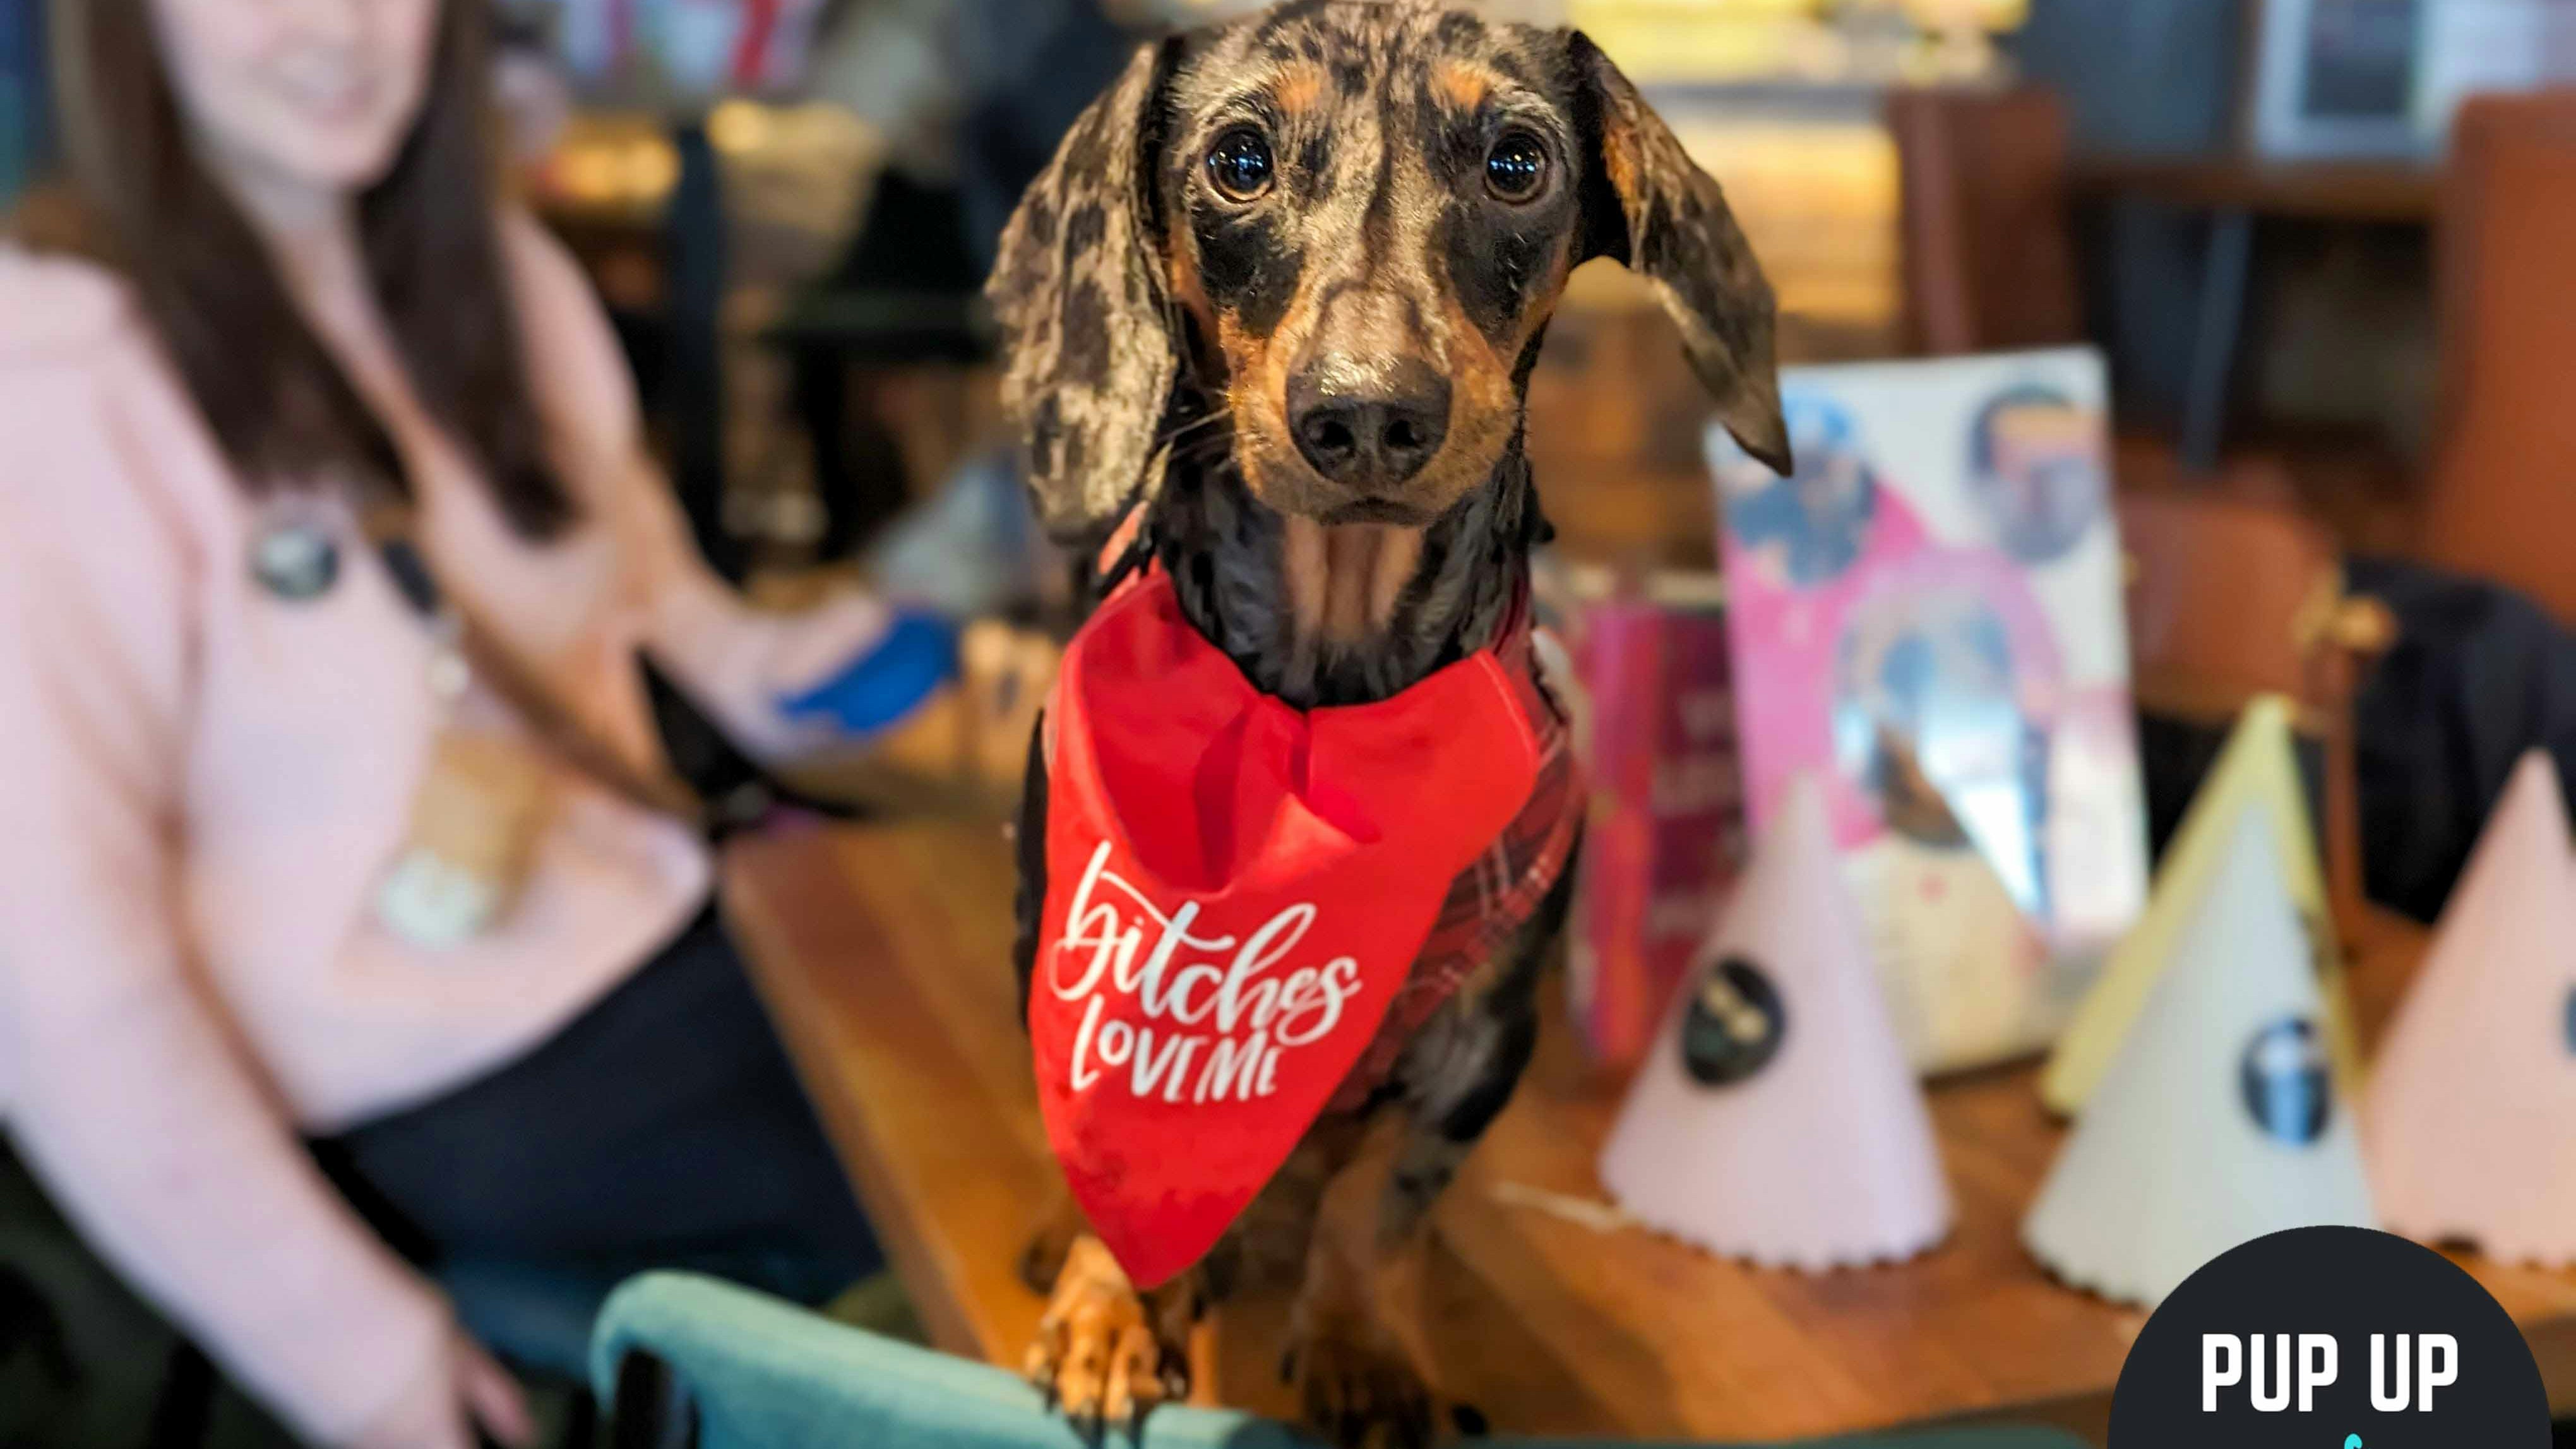 Dachshund Pup Up Cafe – Southampton